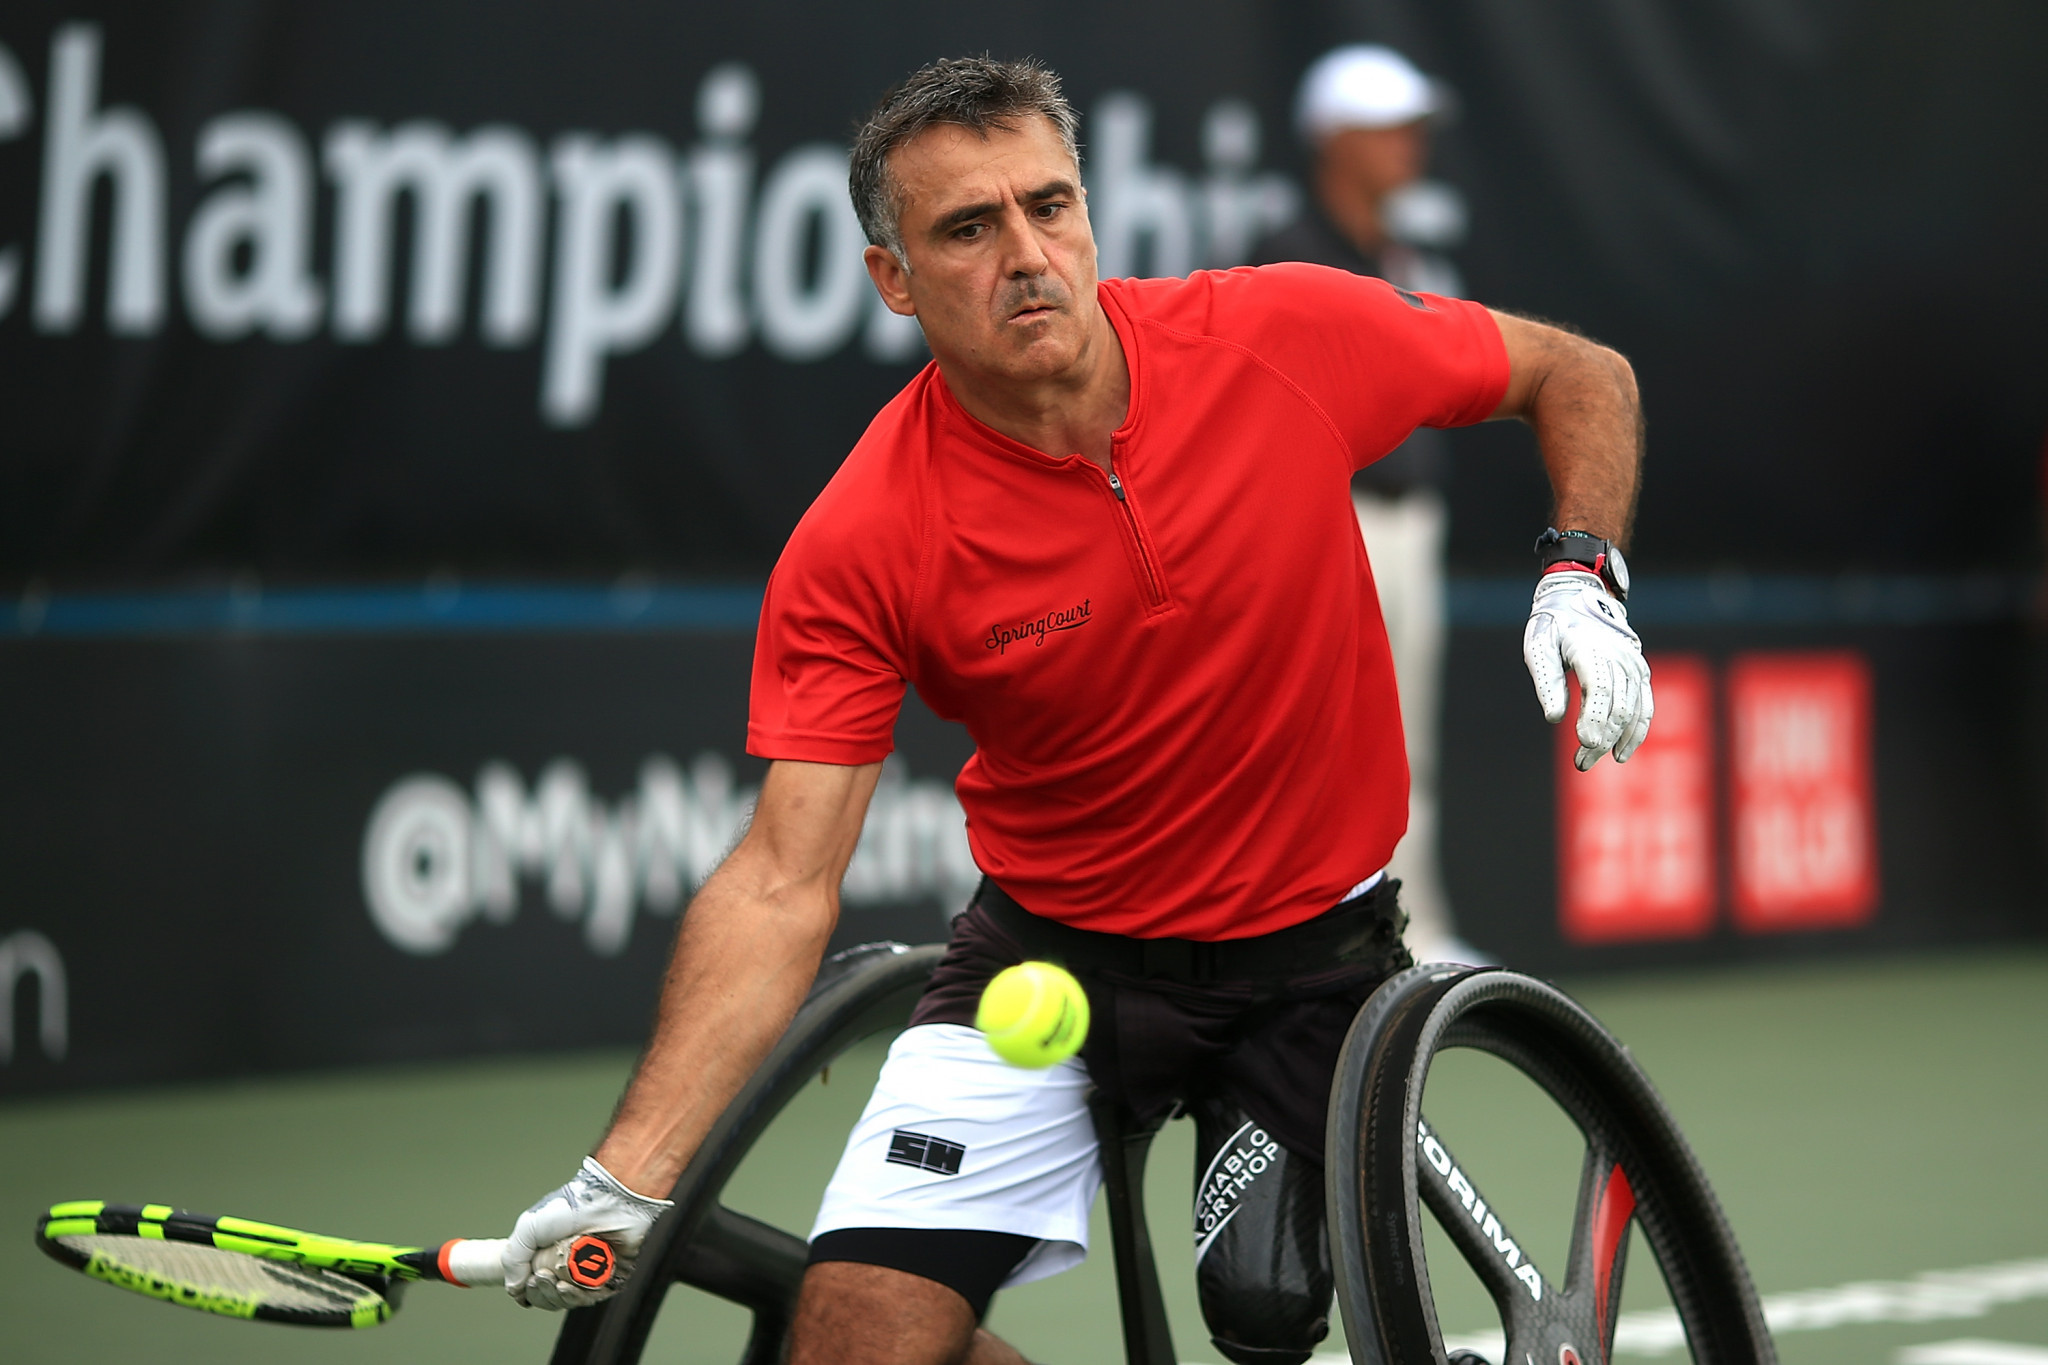 Houdet overcomes top seed to reach men's singles final at Bendigo Wheelchair Tennis Open